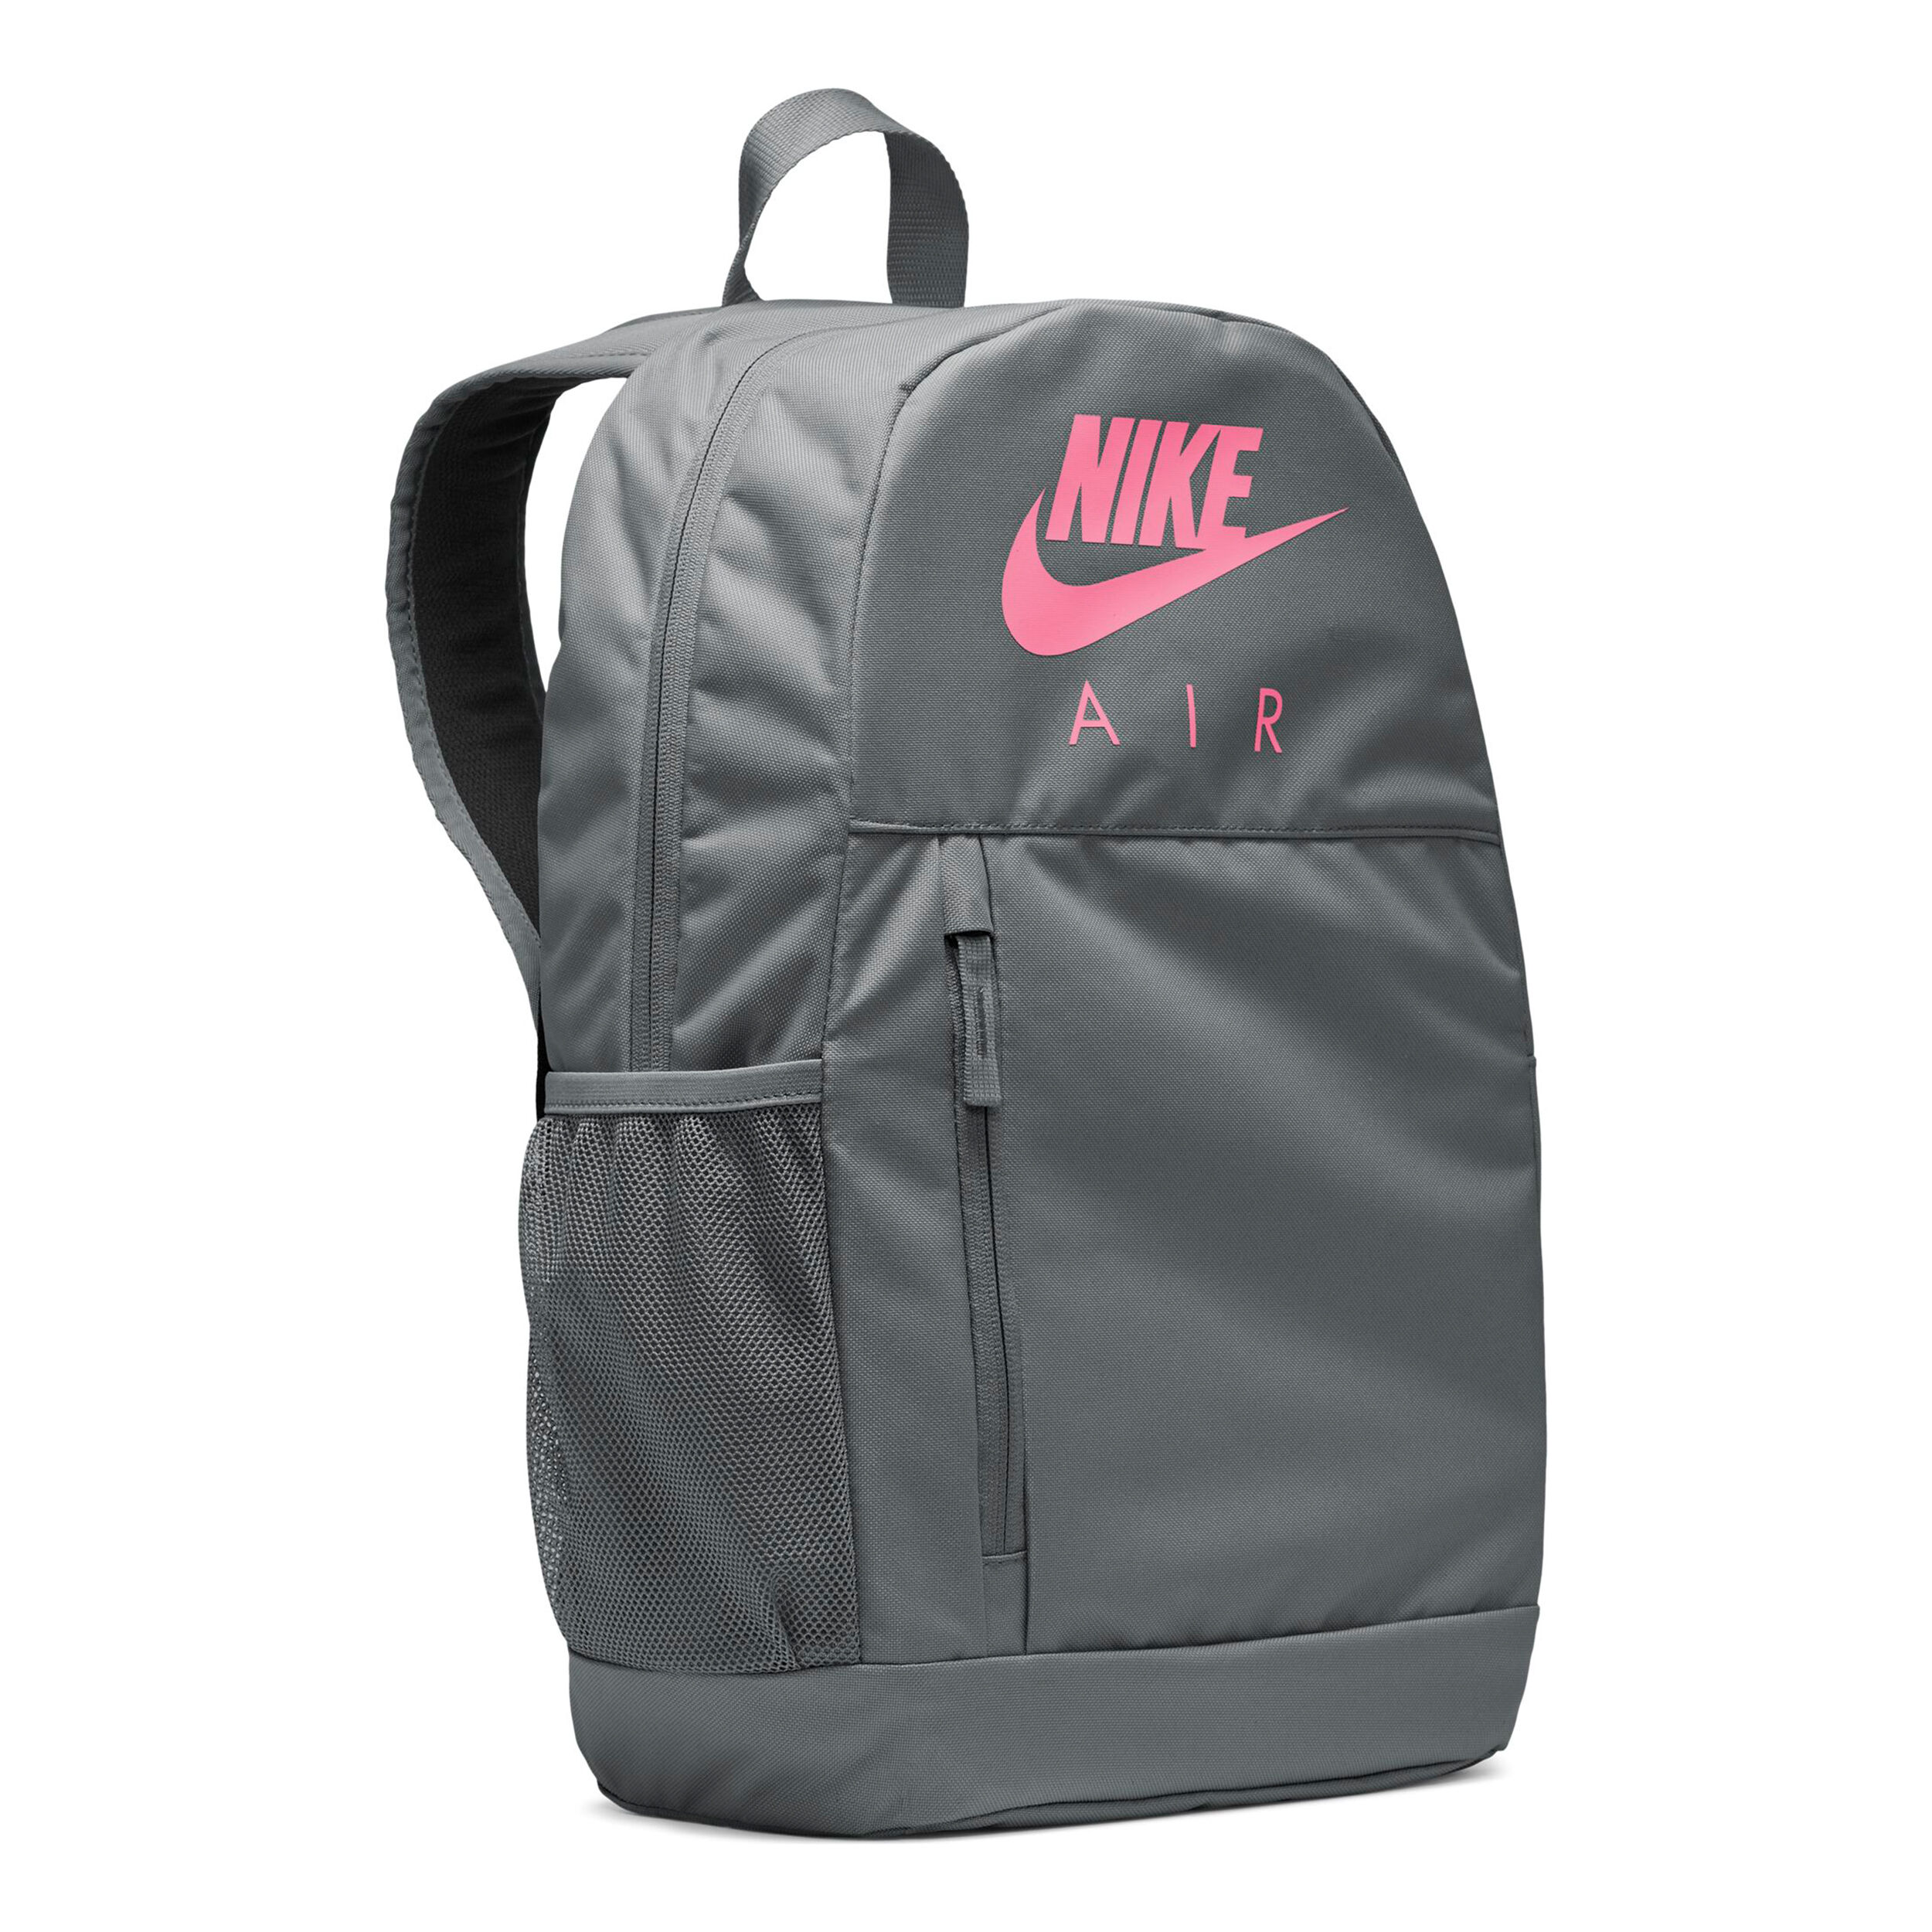 Nike Air Backpack | Black / Iron Grey / White | Footasylum